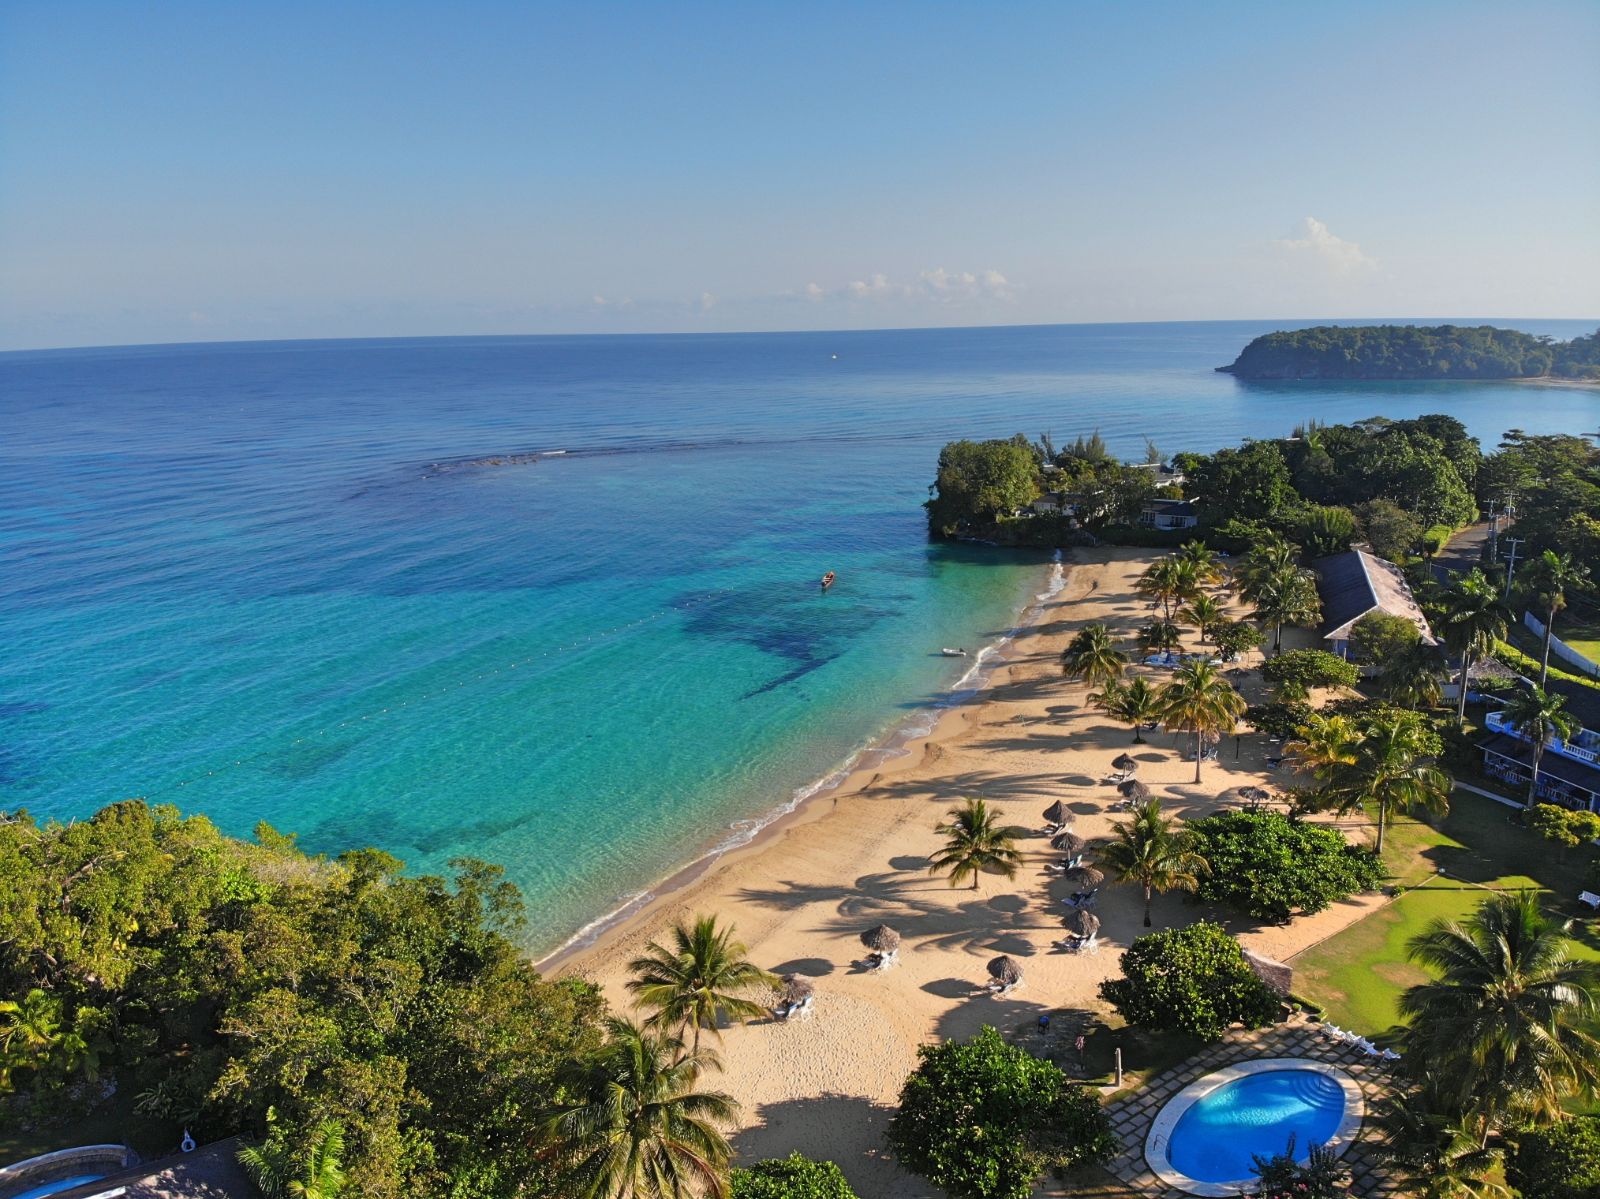 Aerial view of the beach at luxury resort Jamaica Inn in Jamaica